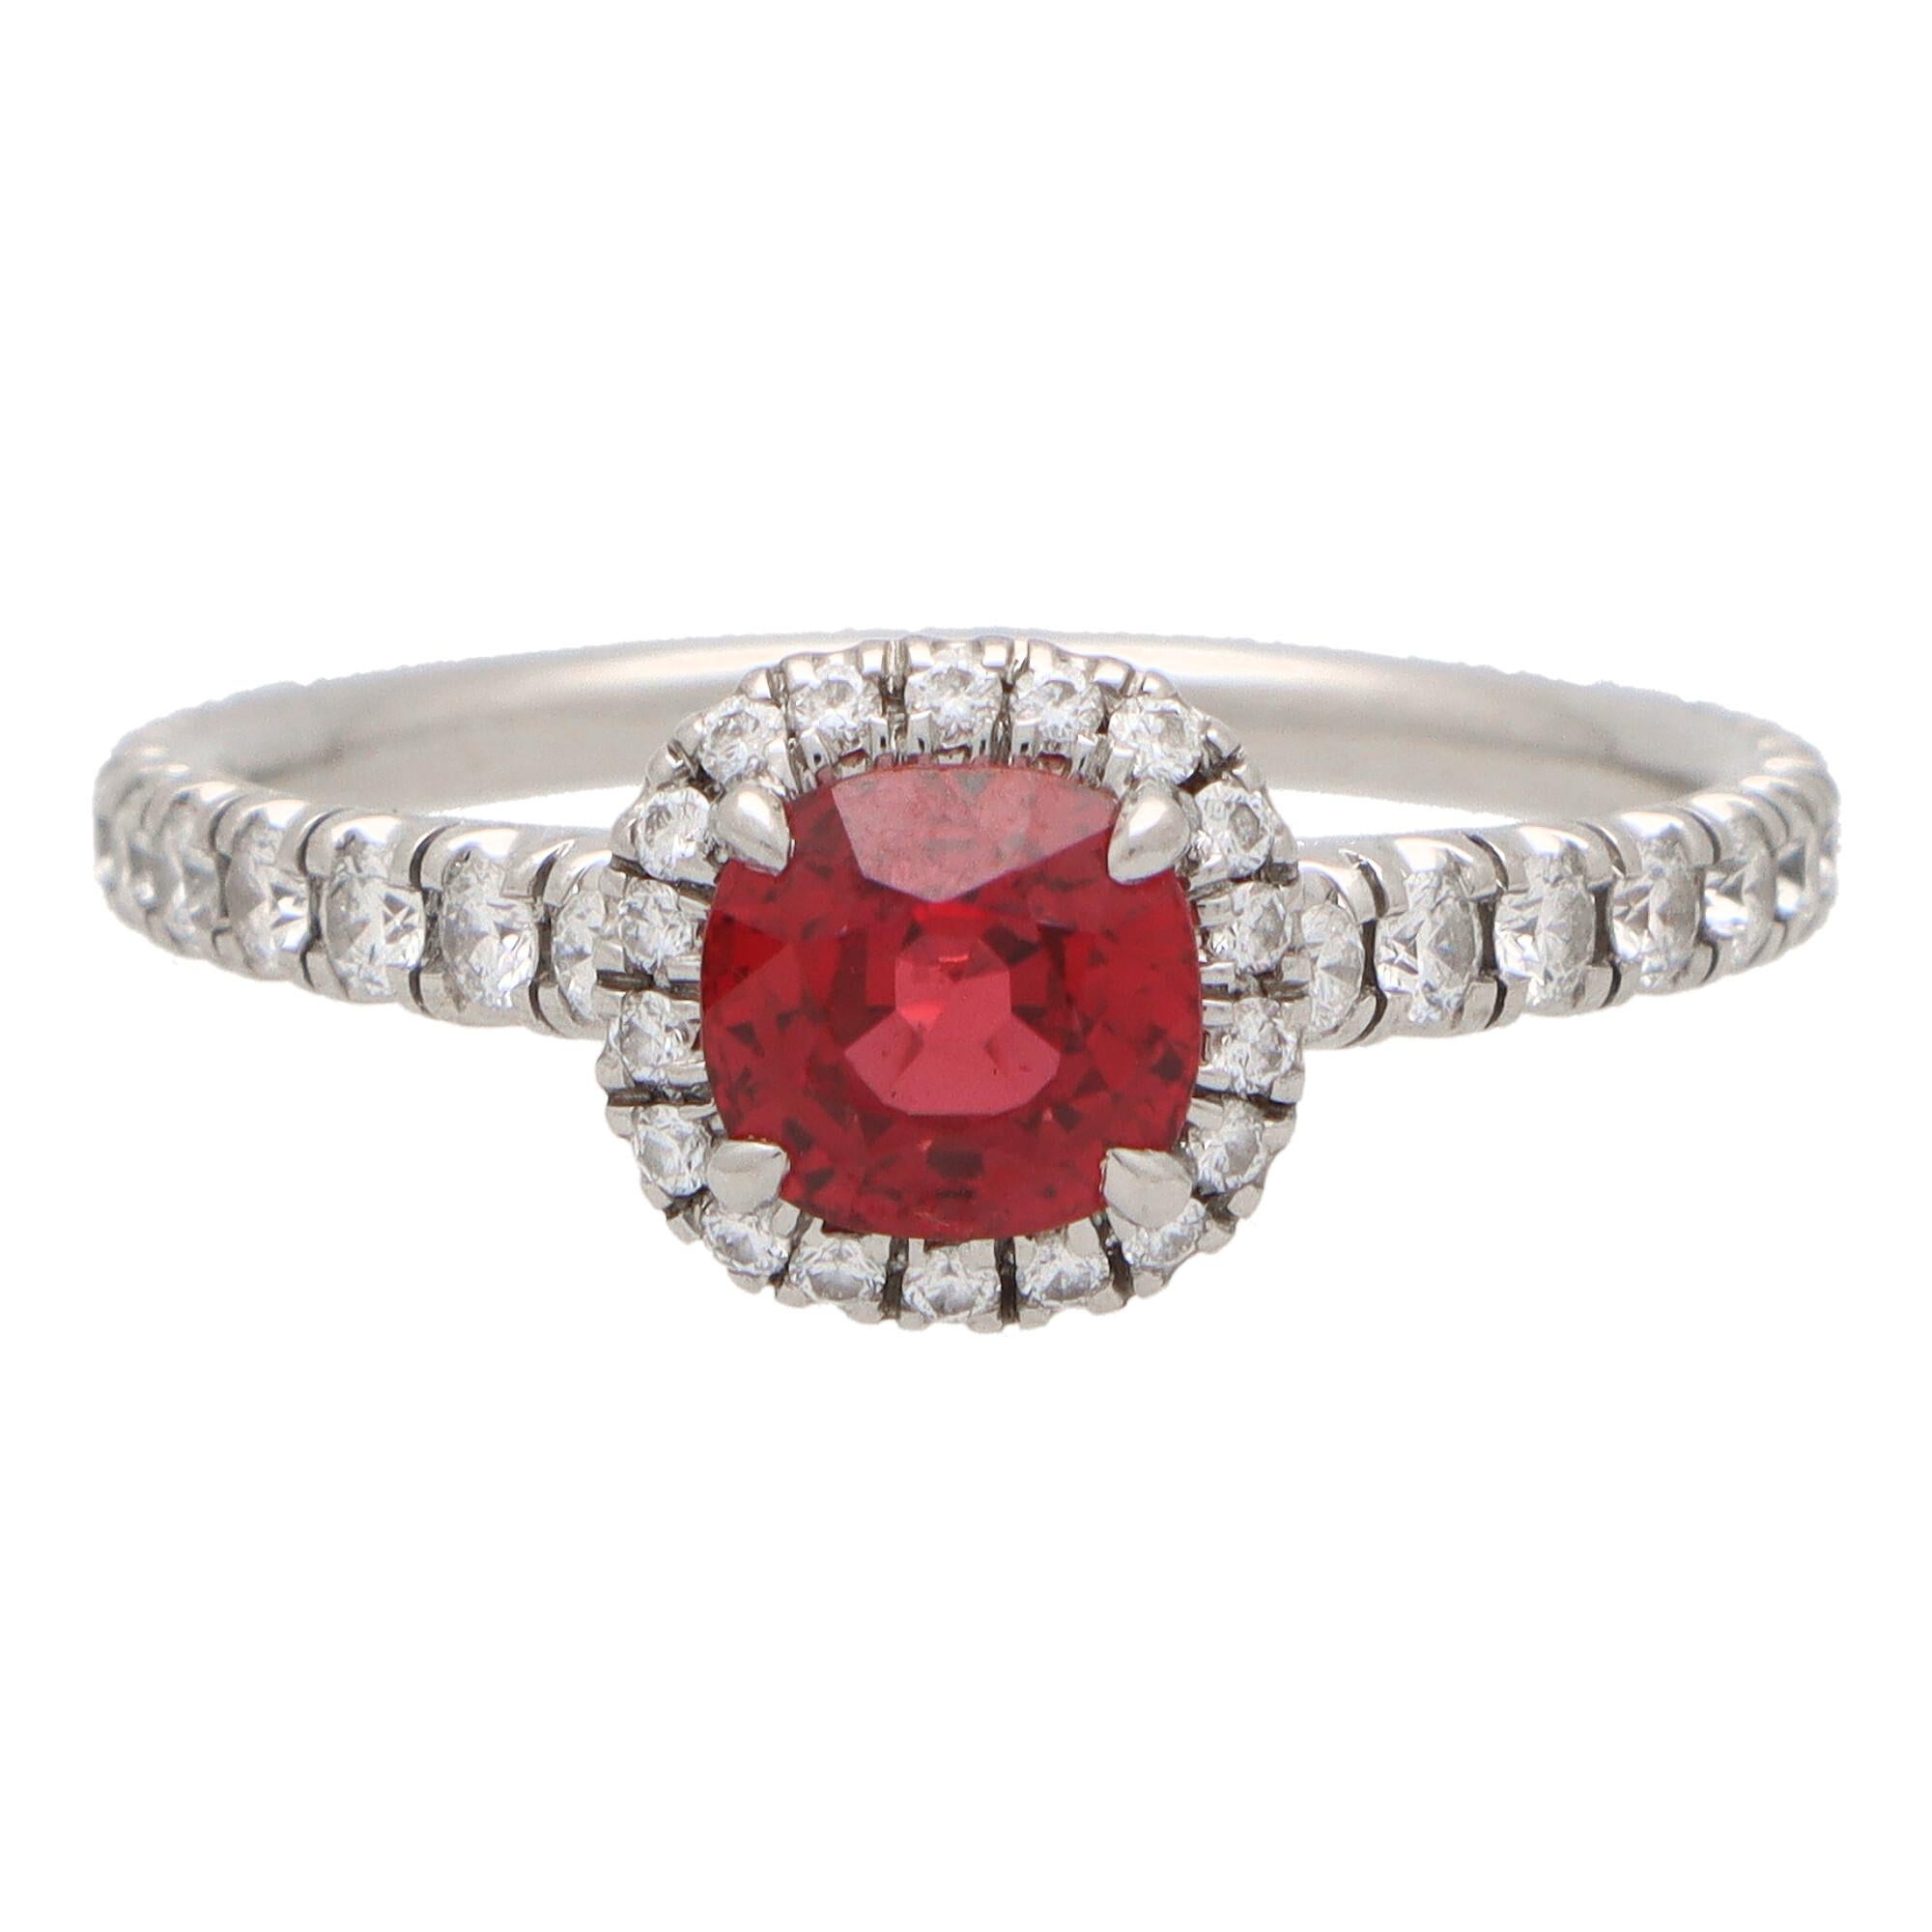 Vintage Cartier Destinée Ruby and Diamond Halo Ring Set in Platinum